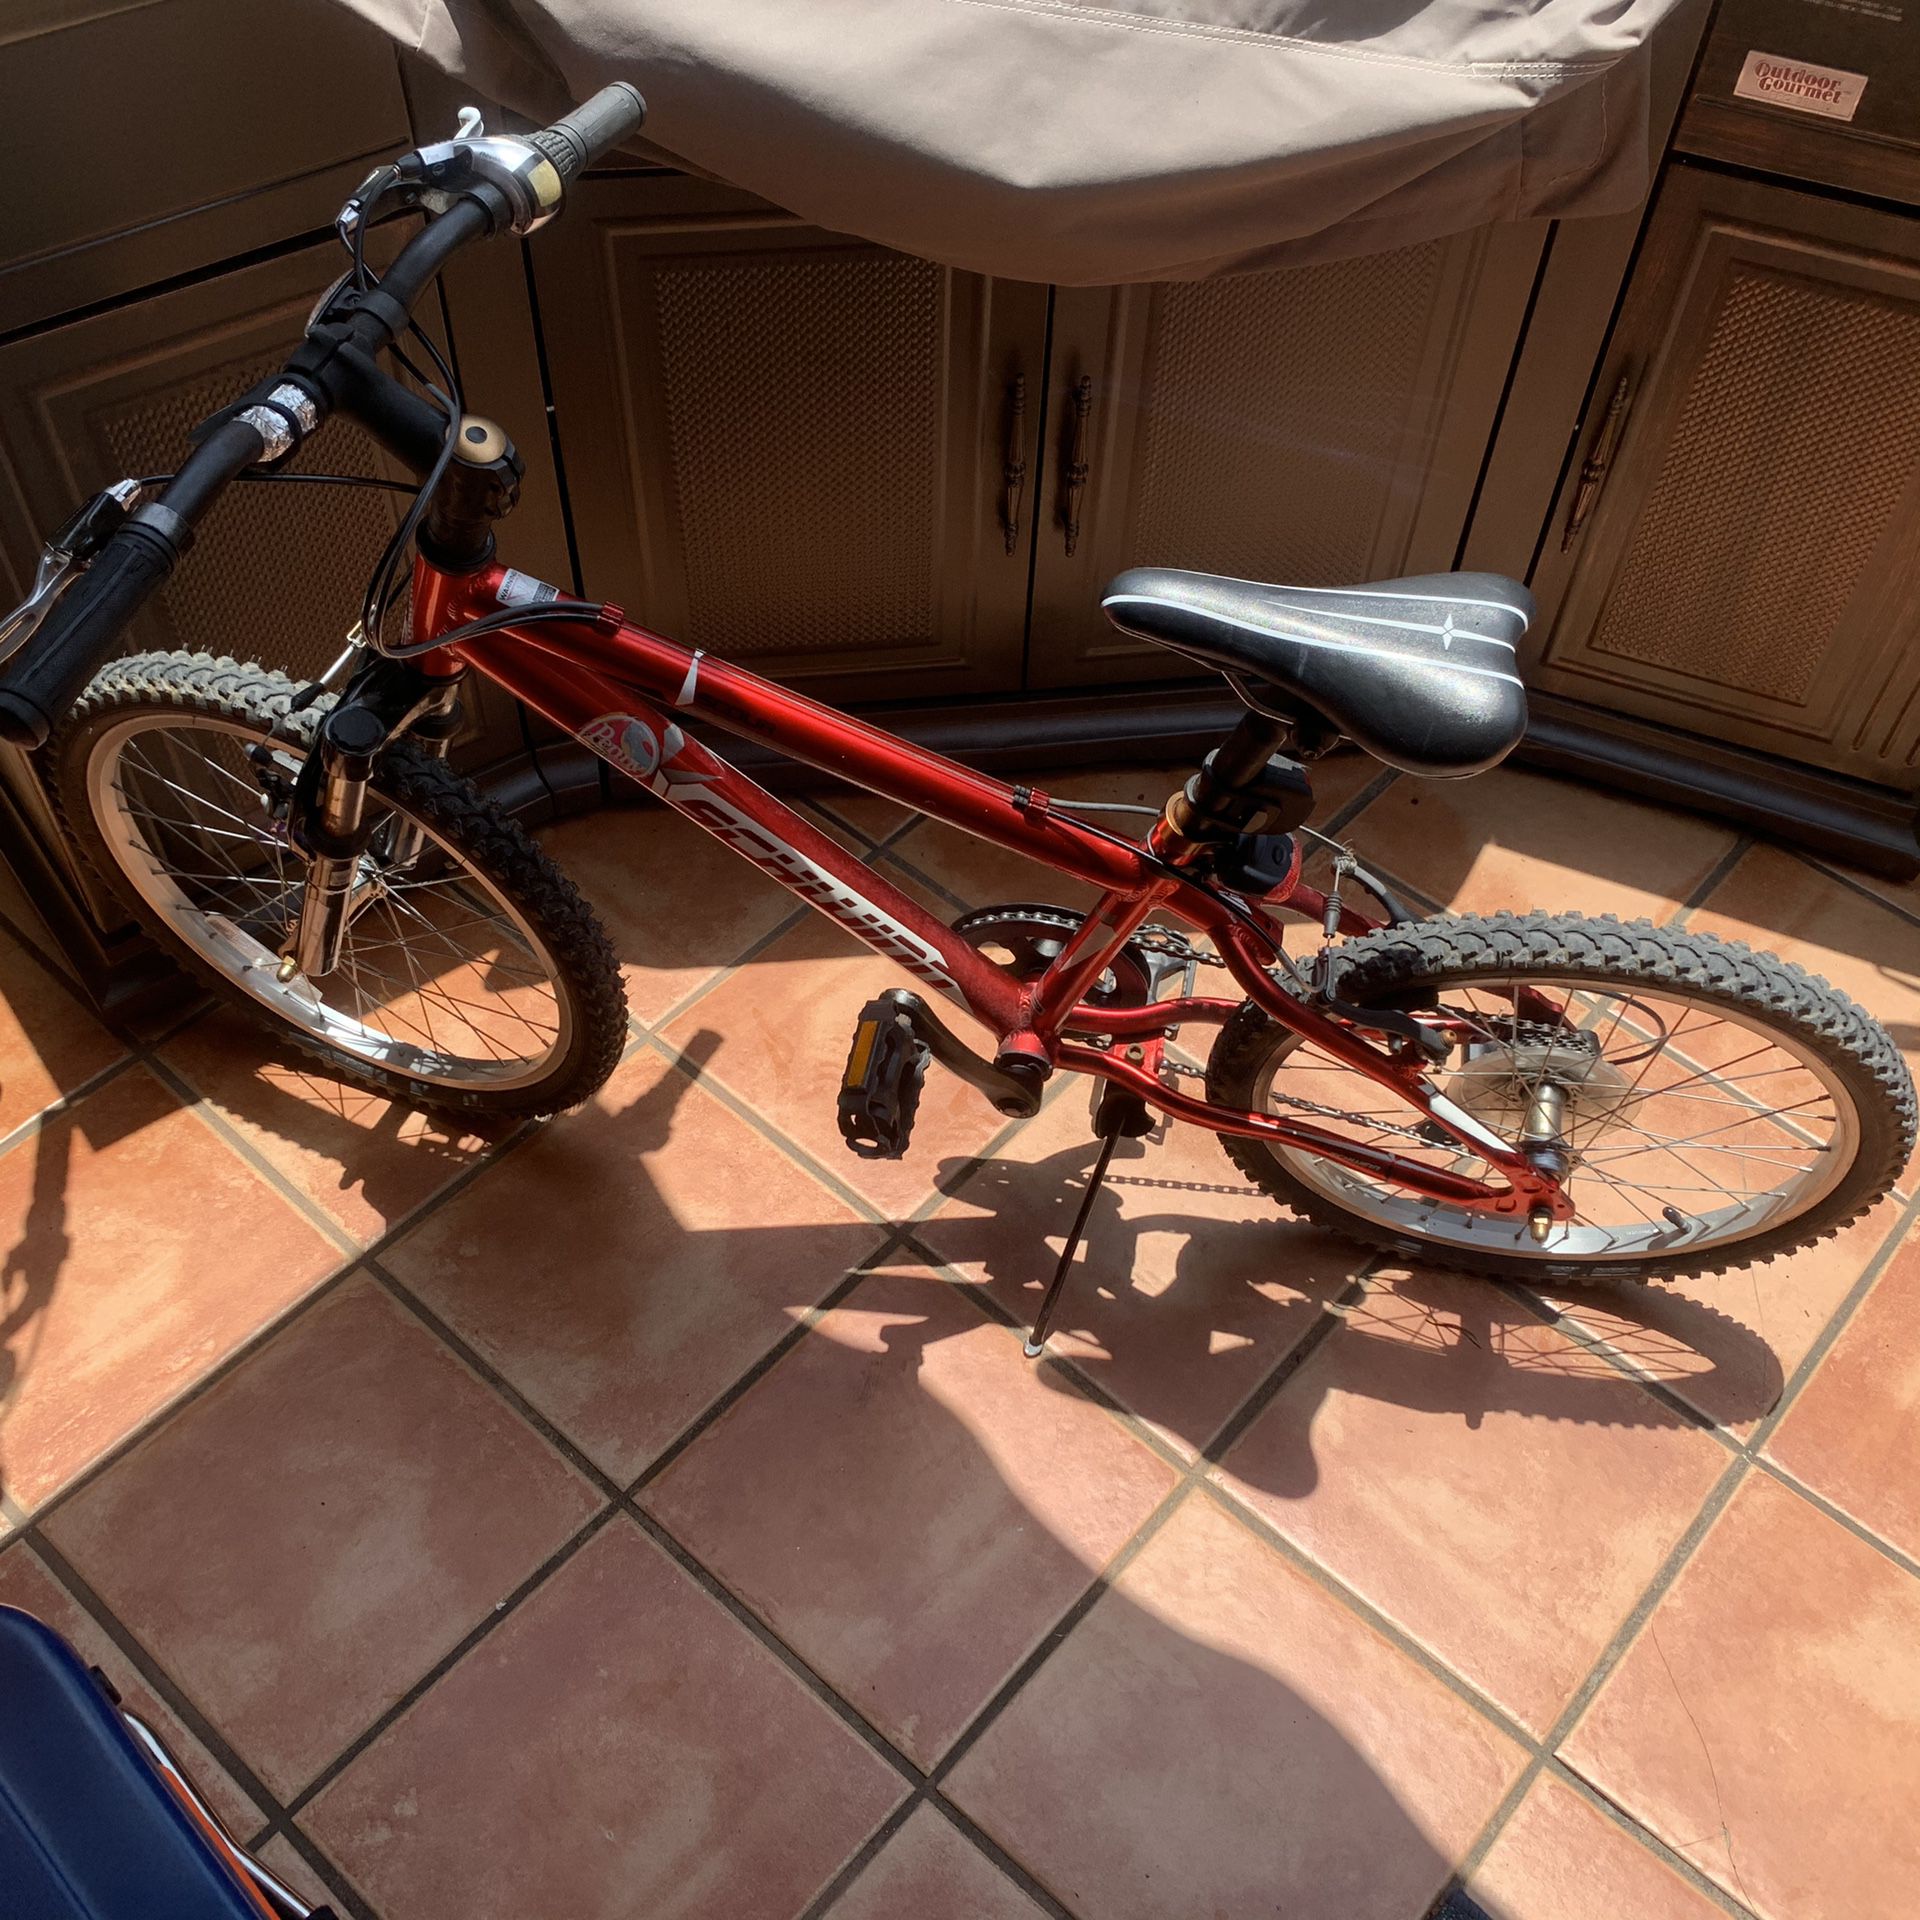 Scwinn 20” Boys Mountain bike perfect for 7-10 year old.